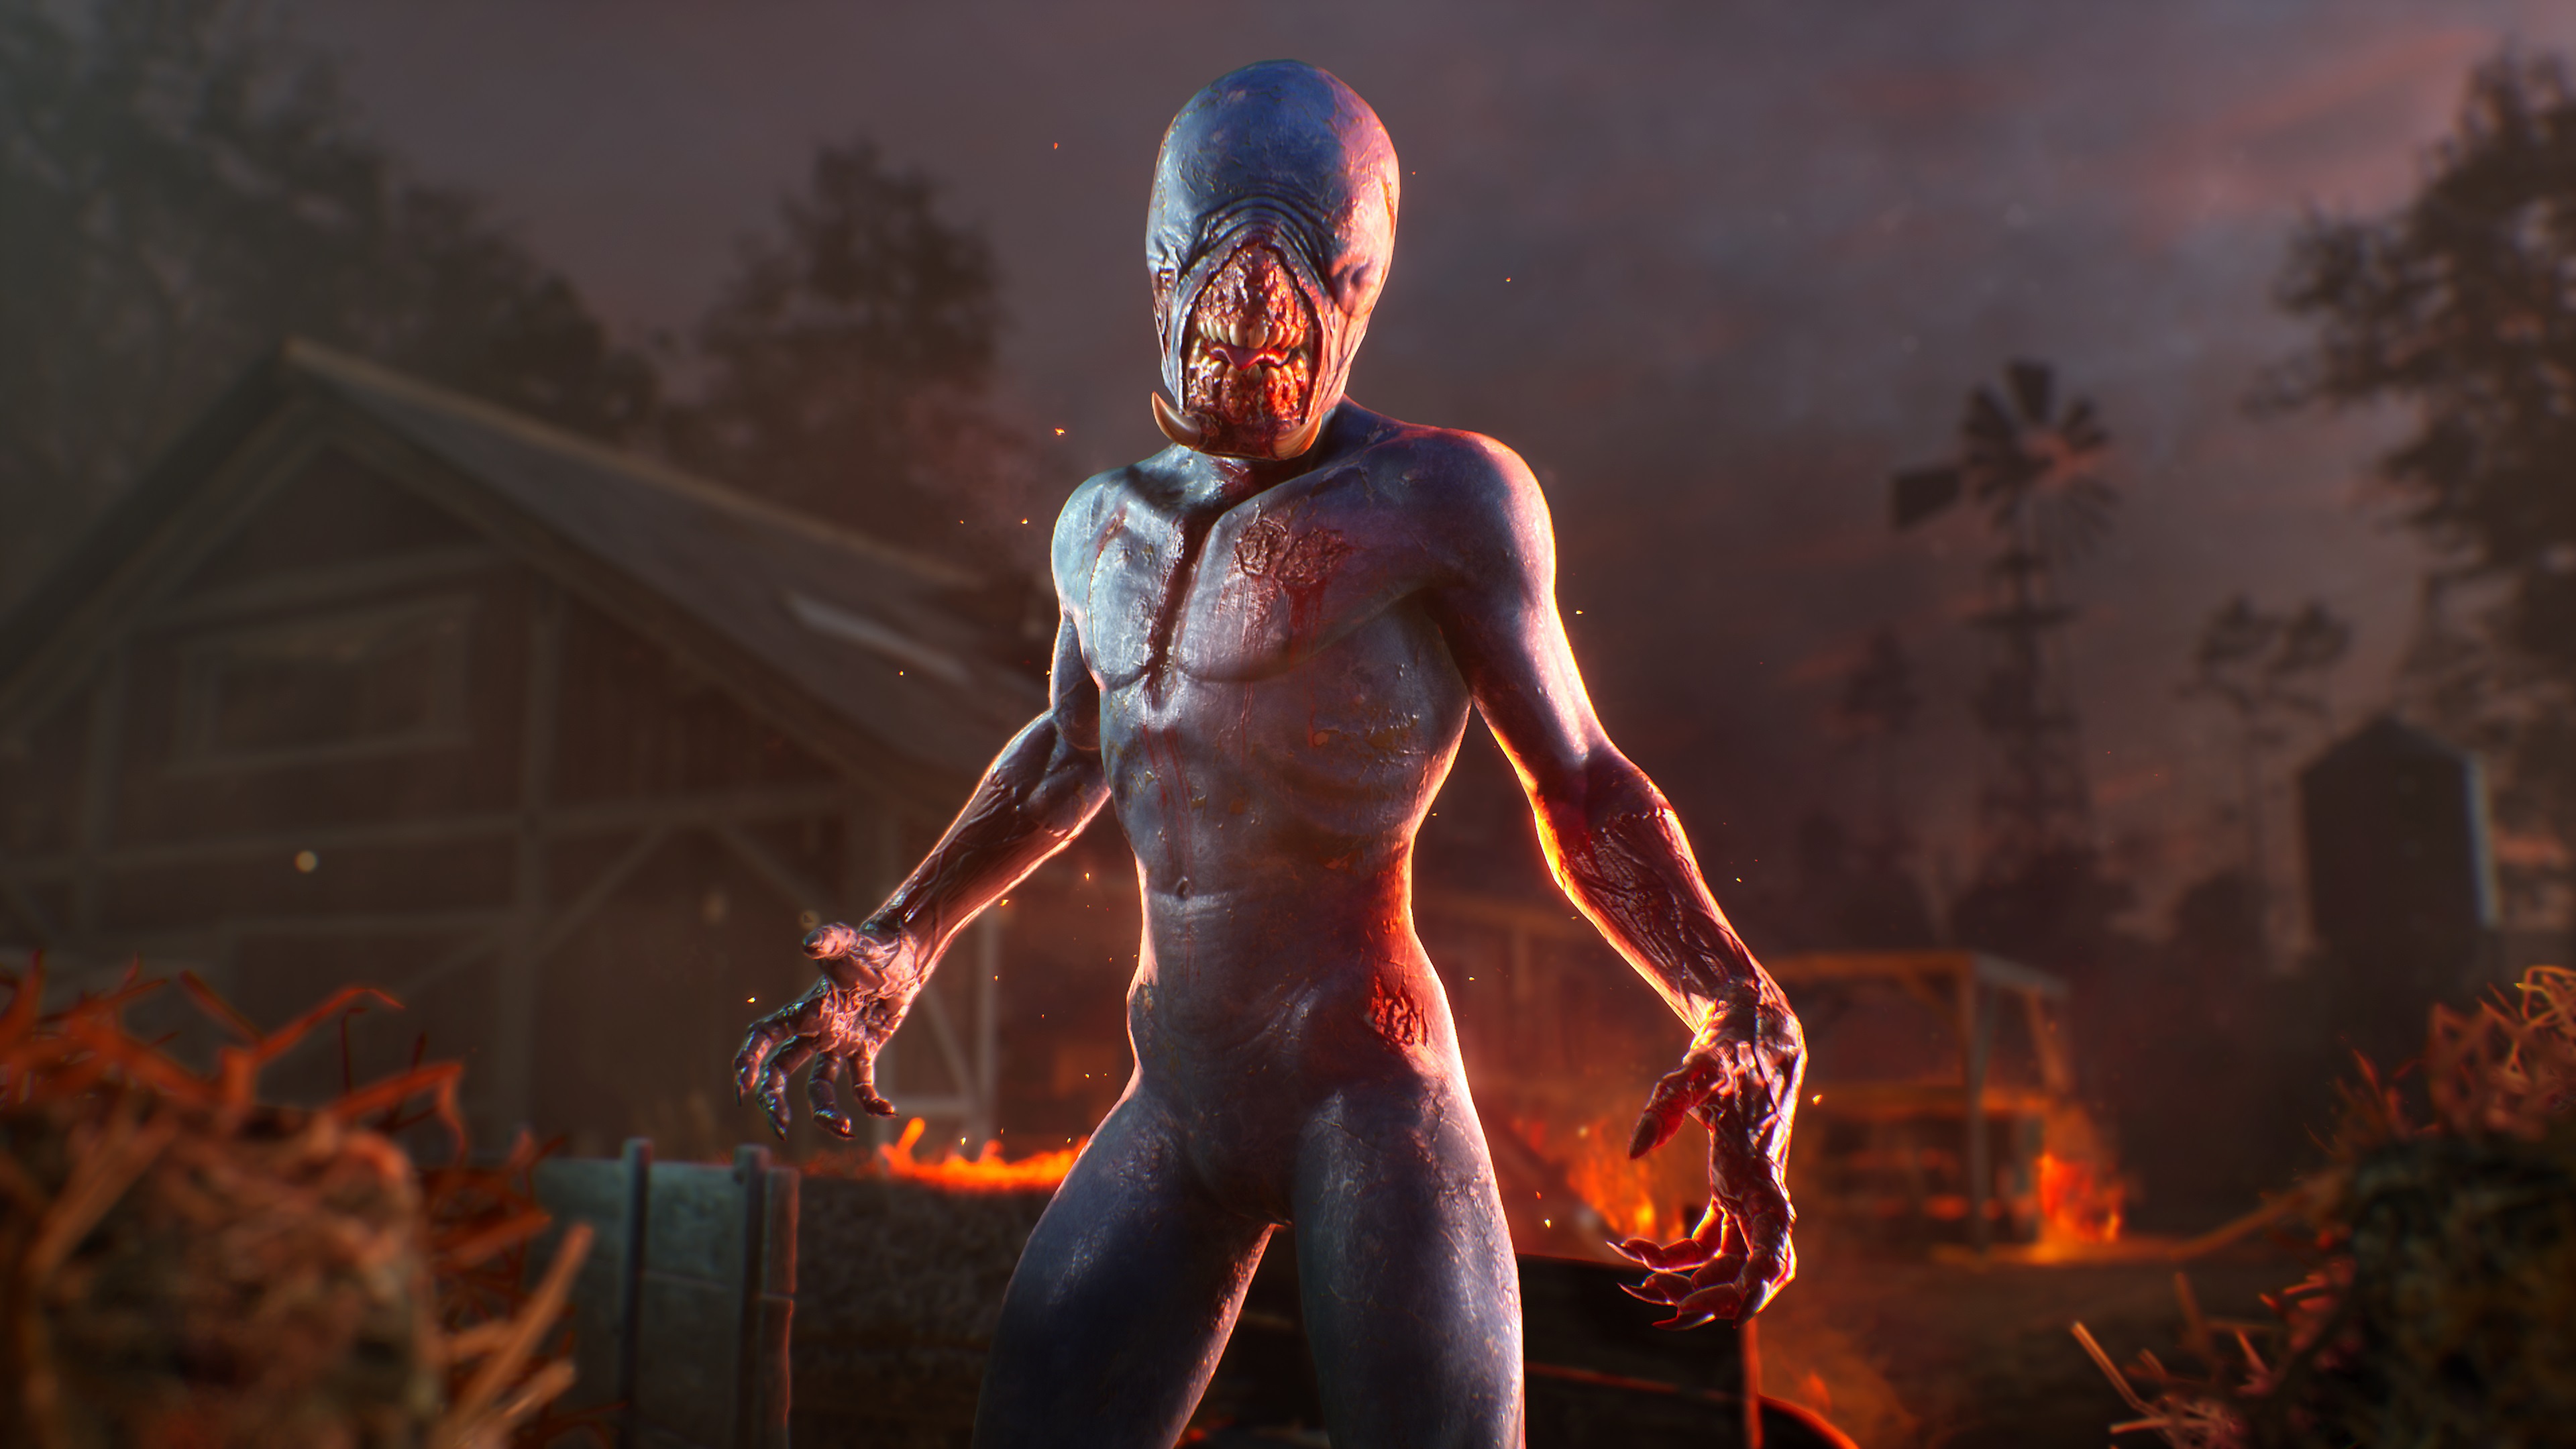 Evil Dead: The Game captura de pantalla mostrando un personaje monstruoso